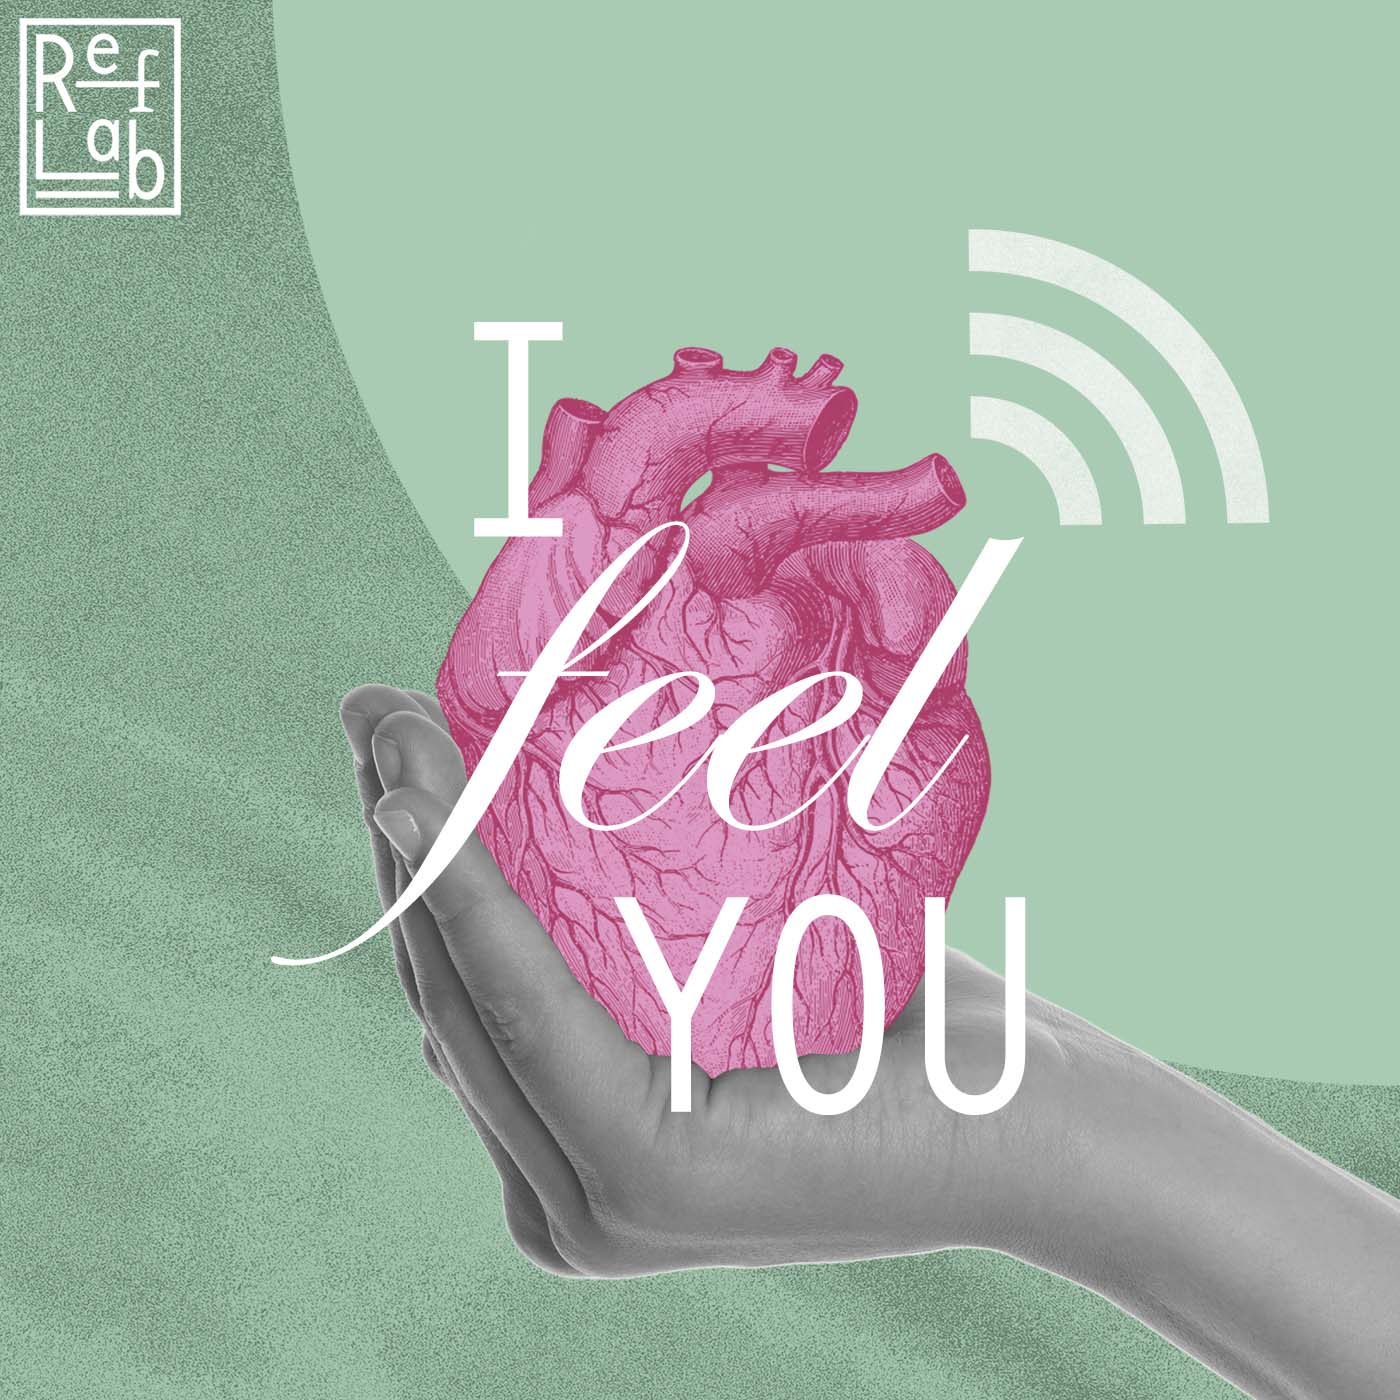 I feel you – ein Psychologie-Podcast (RefLab)